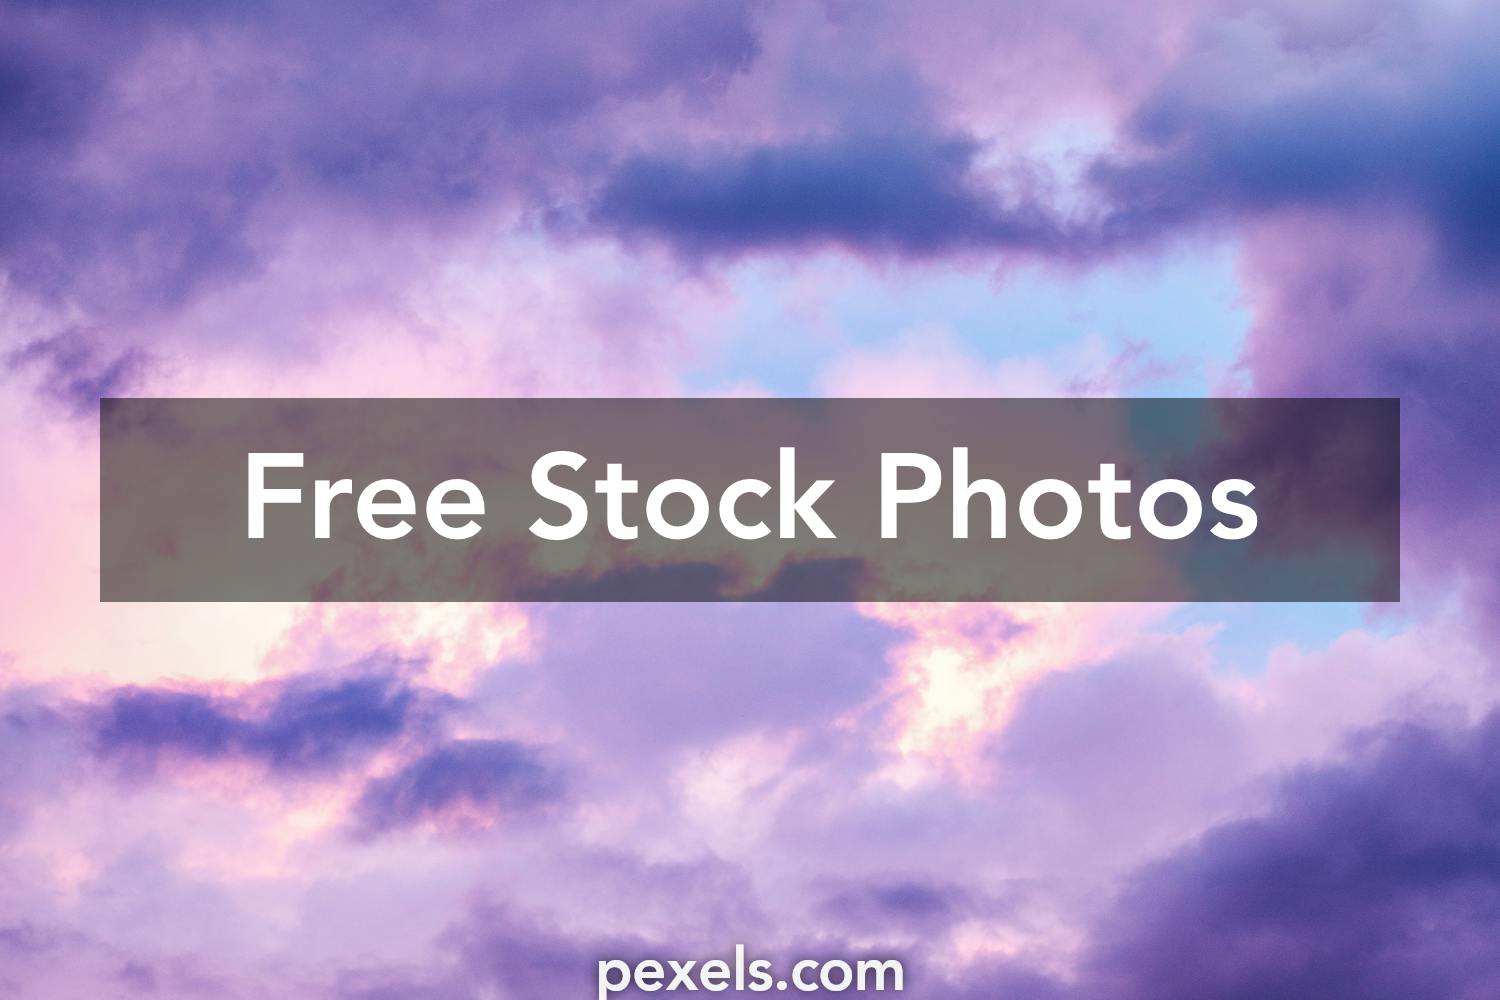 100,000+ Best Backgrounds Photos · 100% Free Download · Pexels